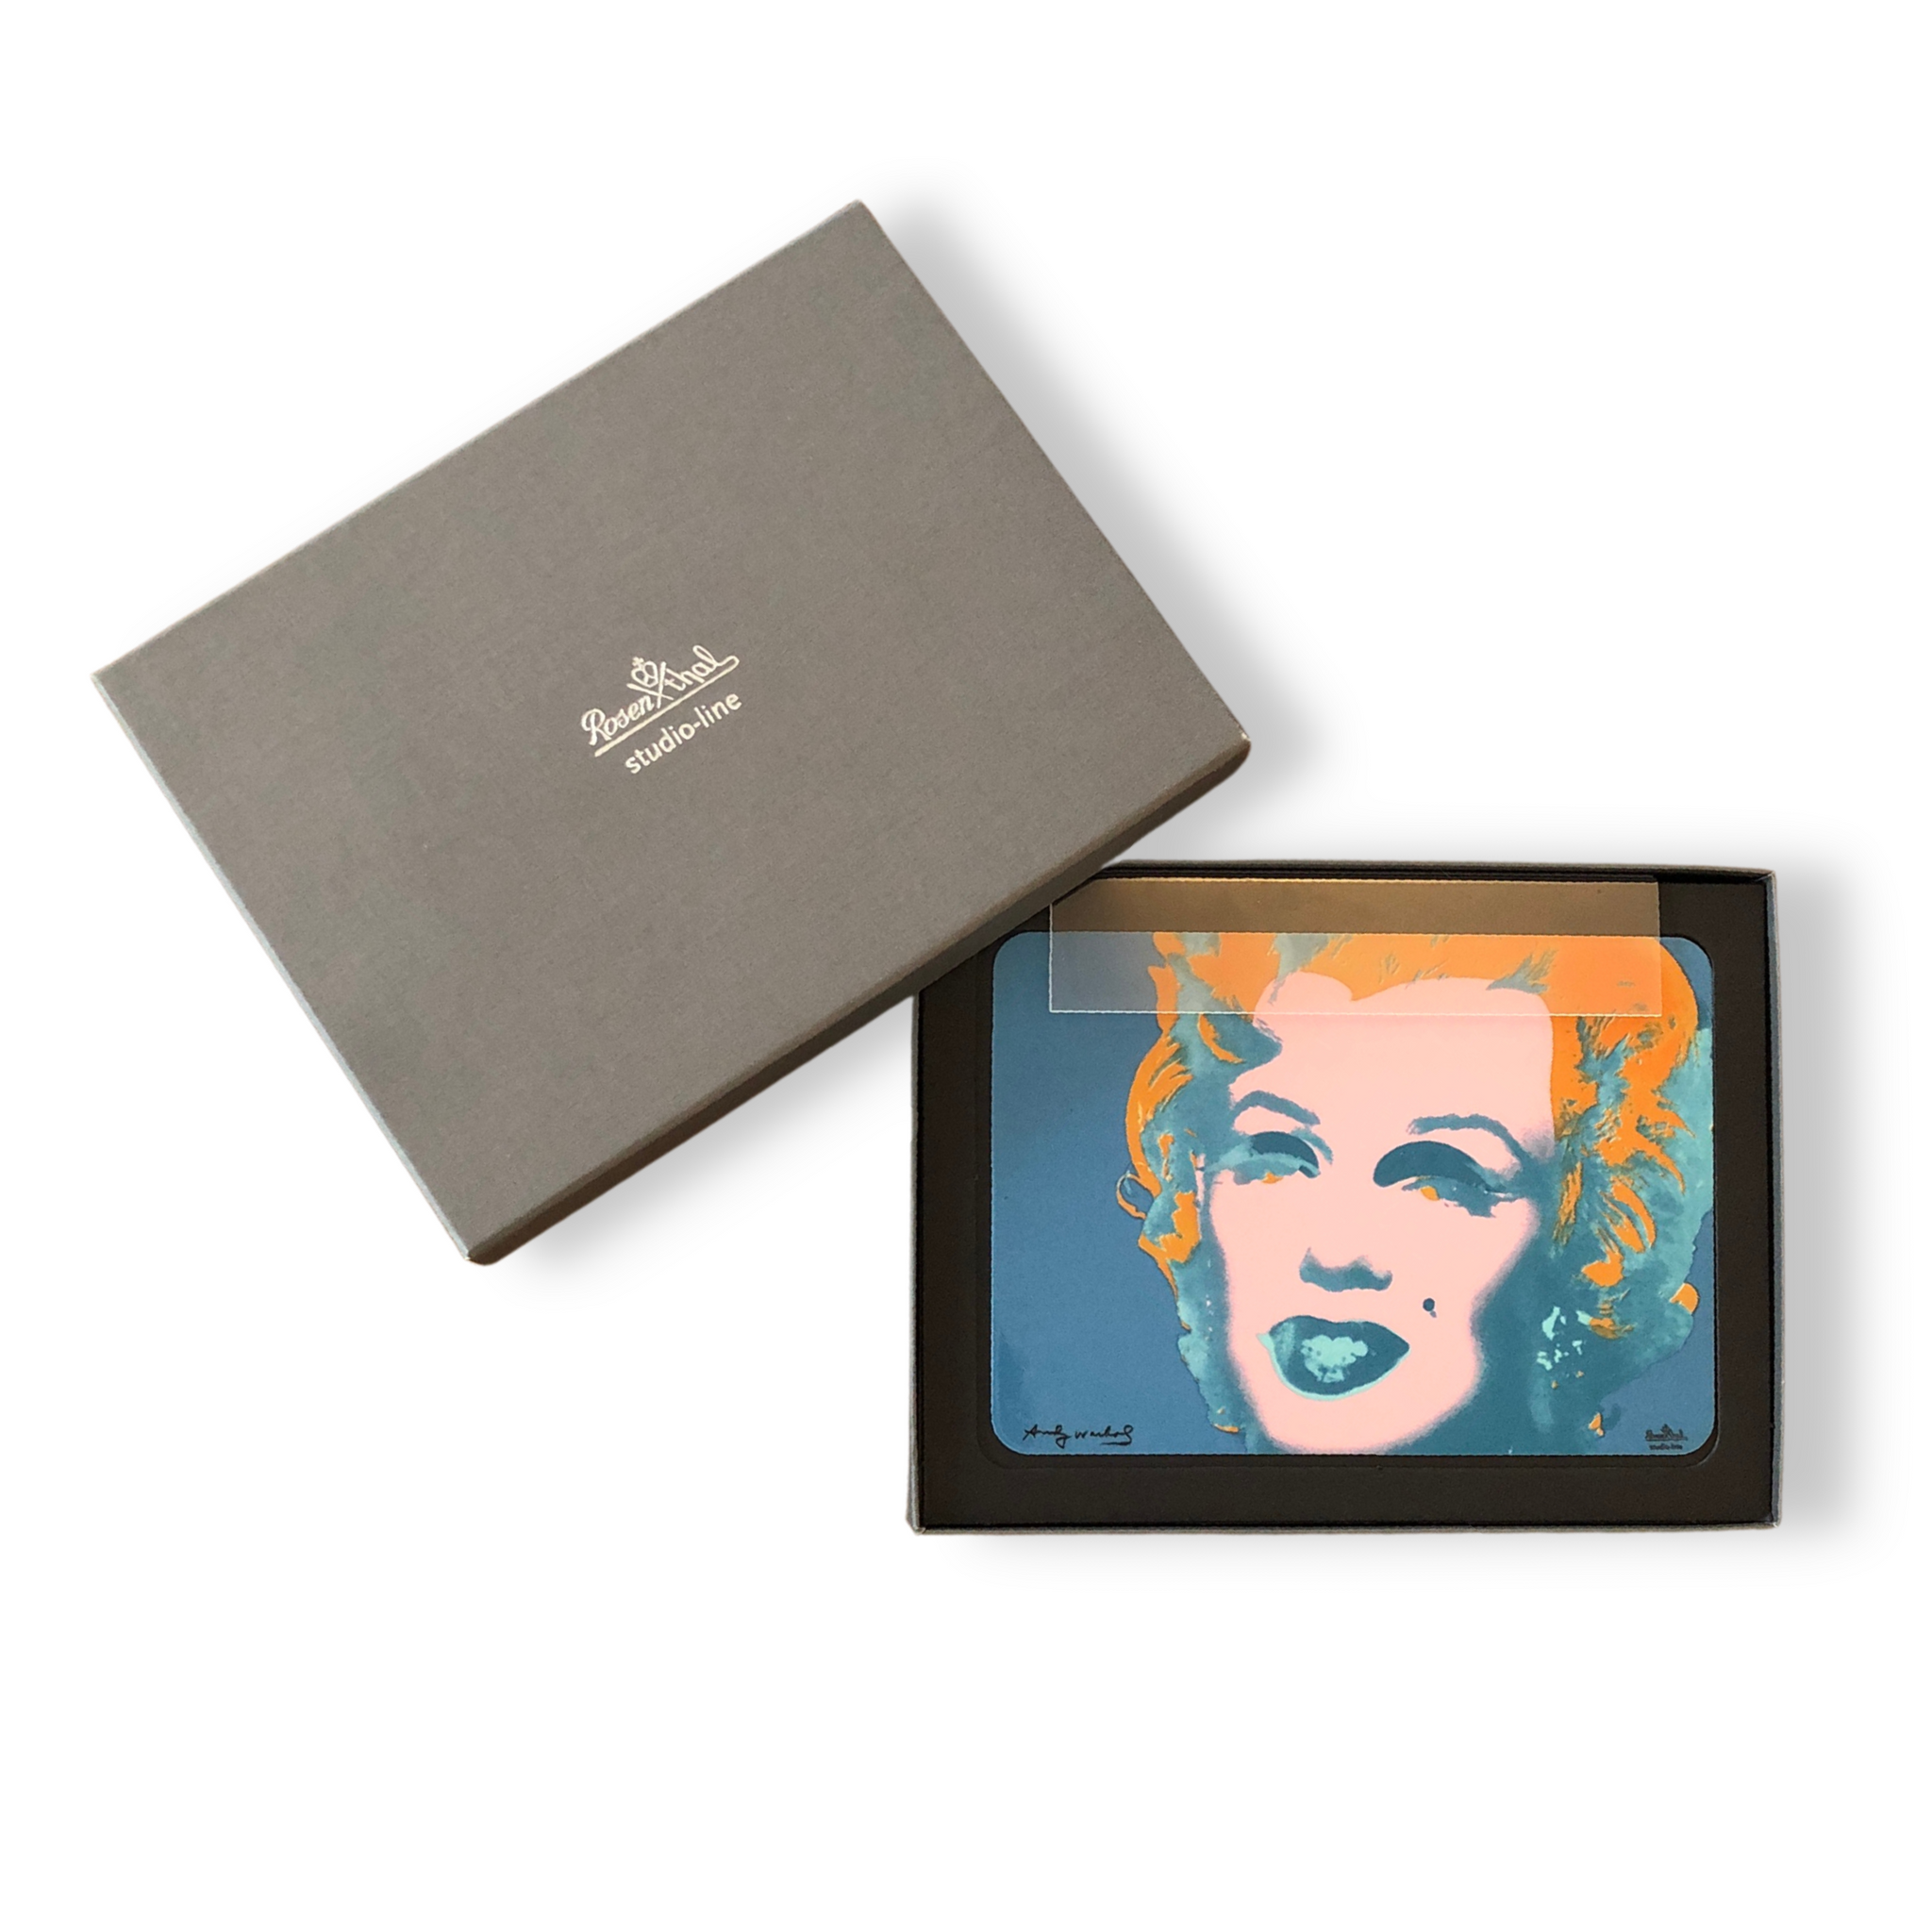 Marilyn Monroe Porcelain Postcard by Rosenthal